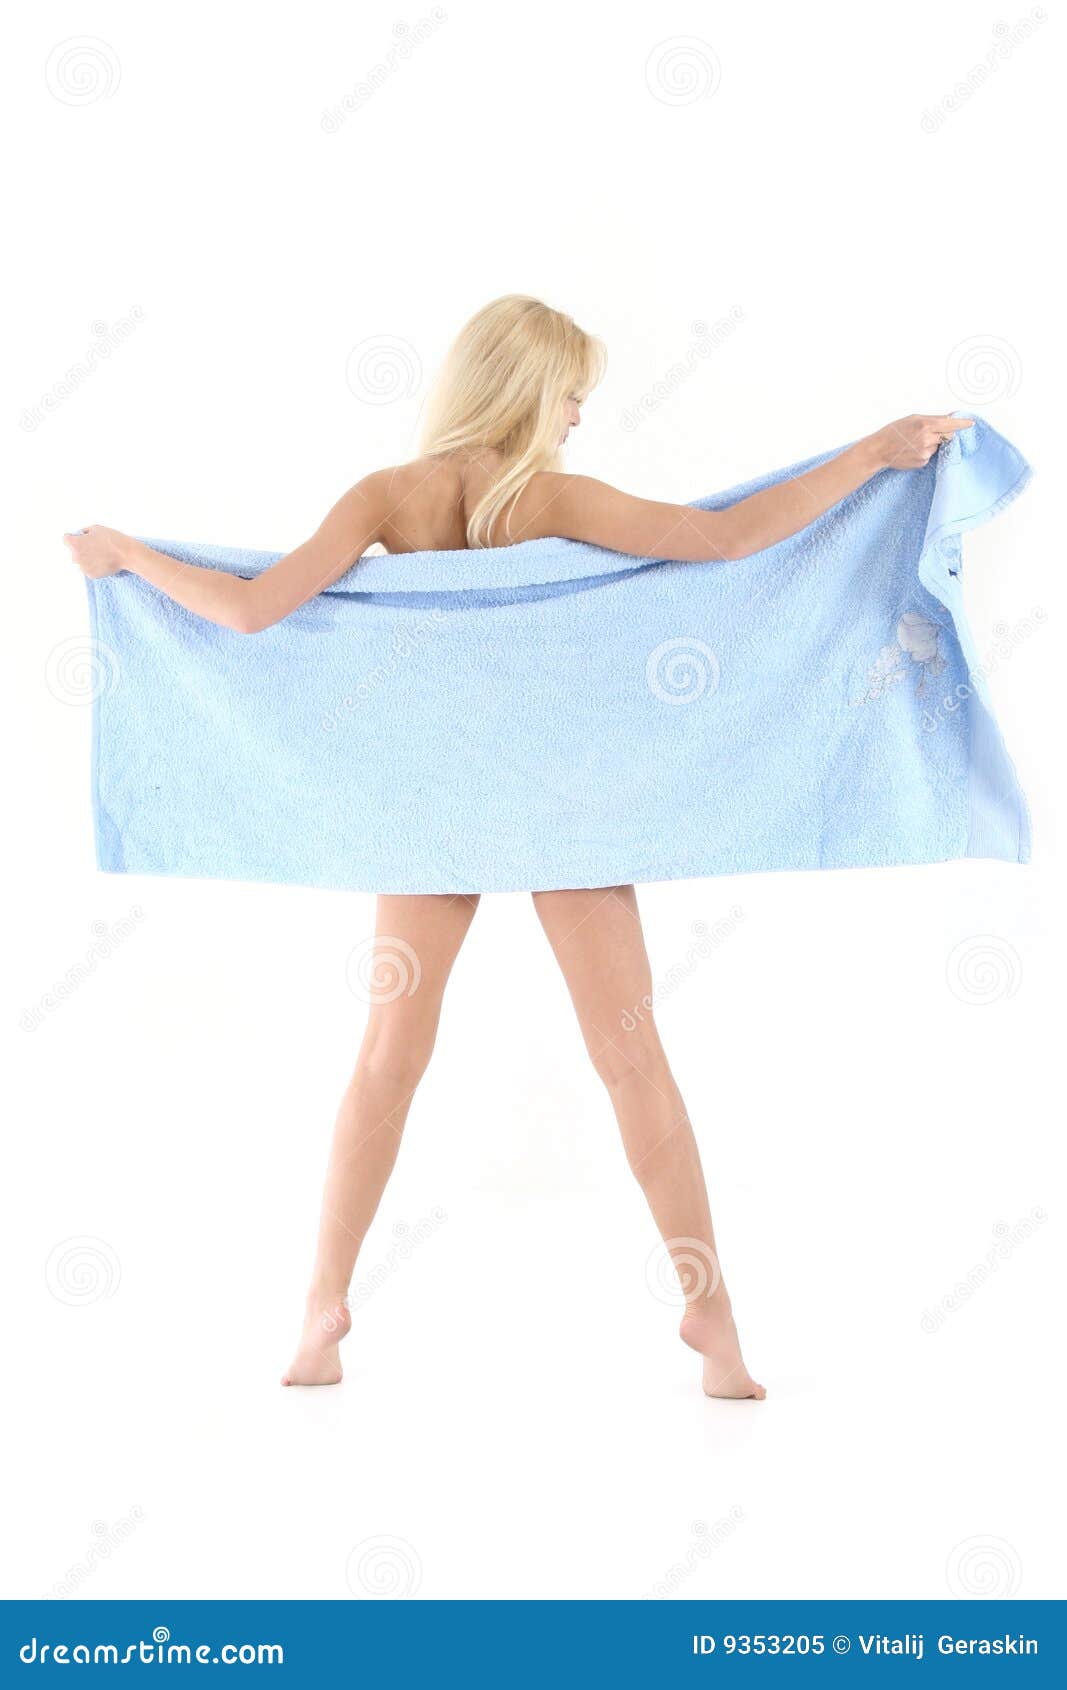 Слетело полотенце. Девушка в одном полотенце. Блондинка в синем полотенце. Девушка прикрывается полотенцем. Девушка с синим полотенцем.